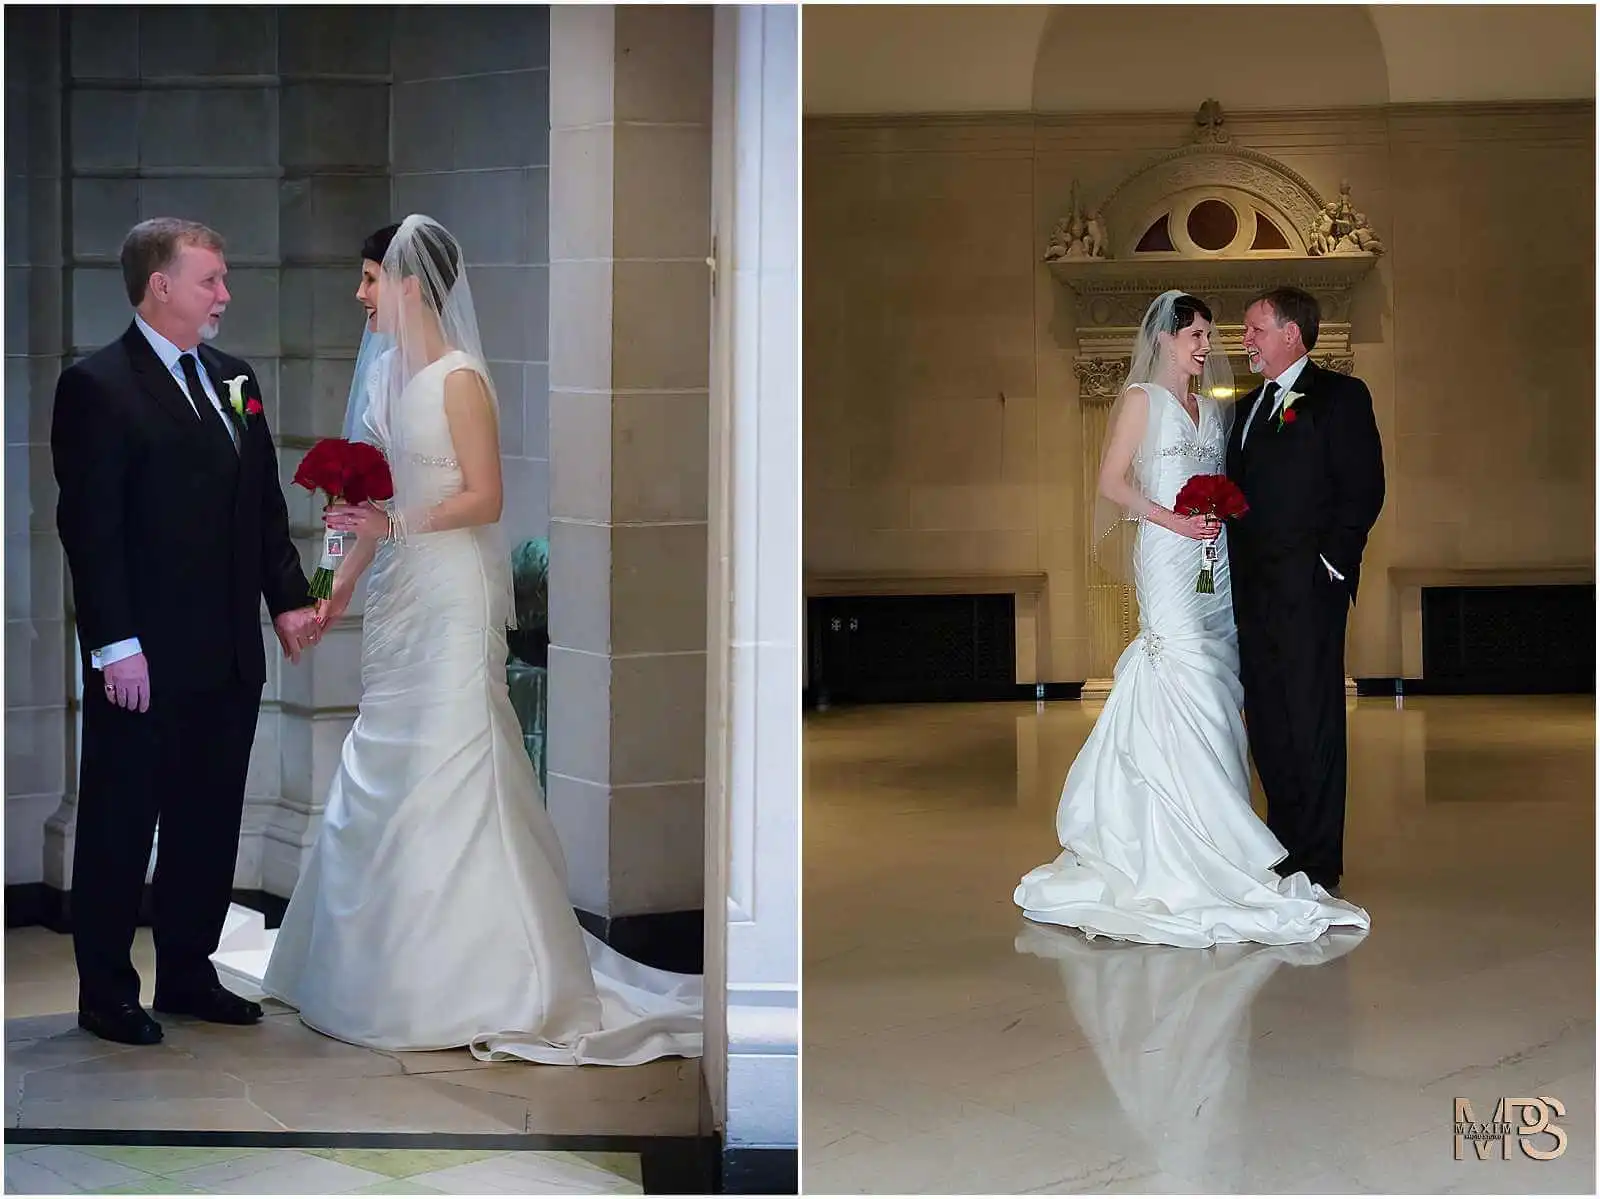 Dayton Art Institute Winter Wedding portraits bride and groom